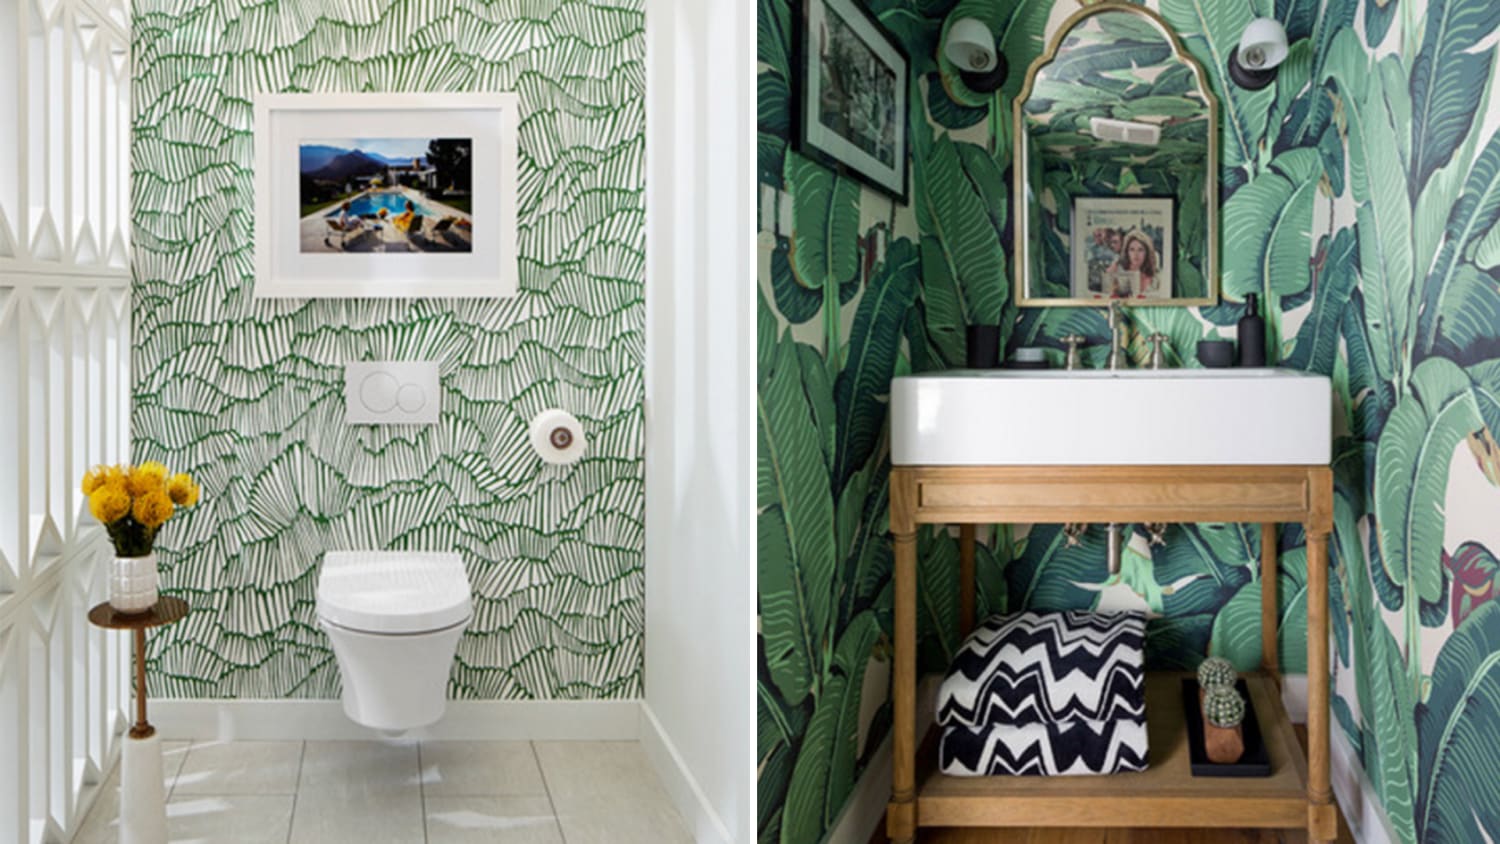 Design tricks that can make a small bathroom feel bigger ...